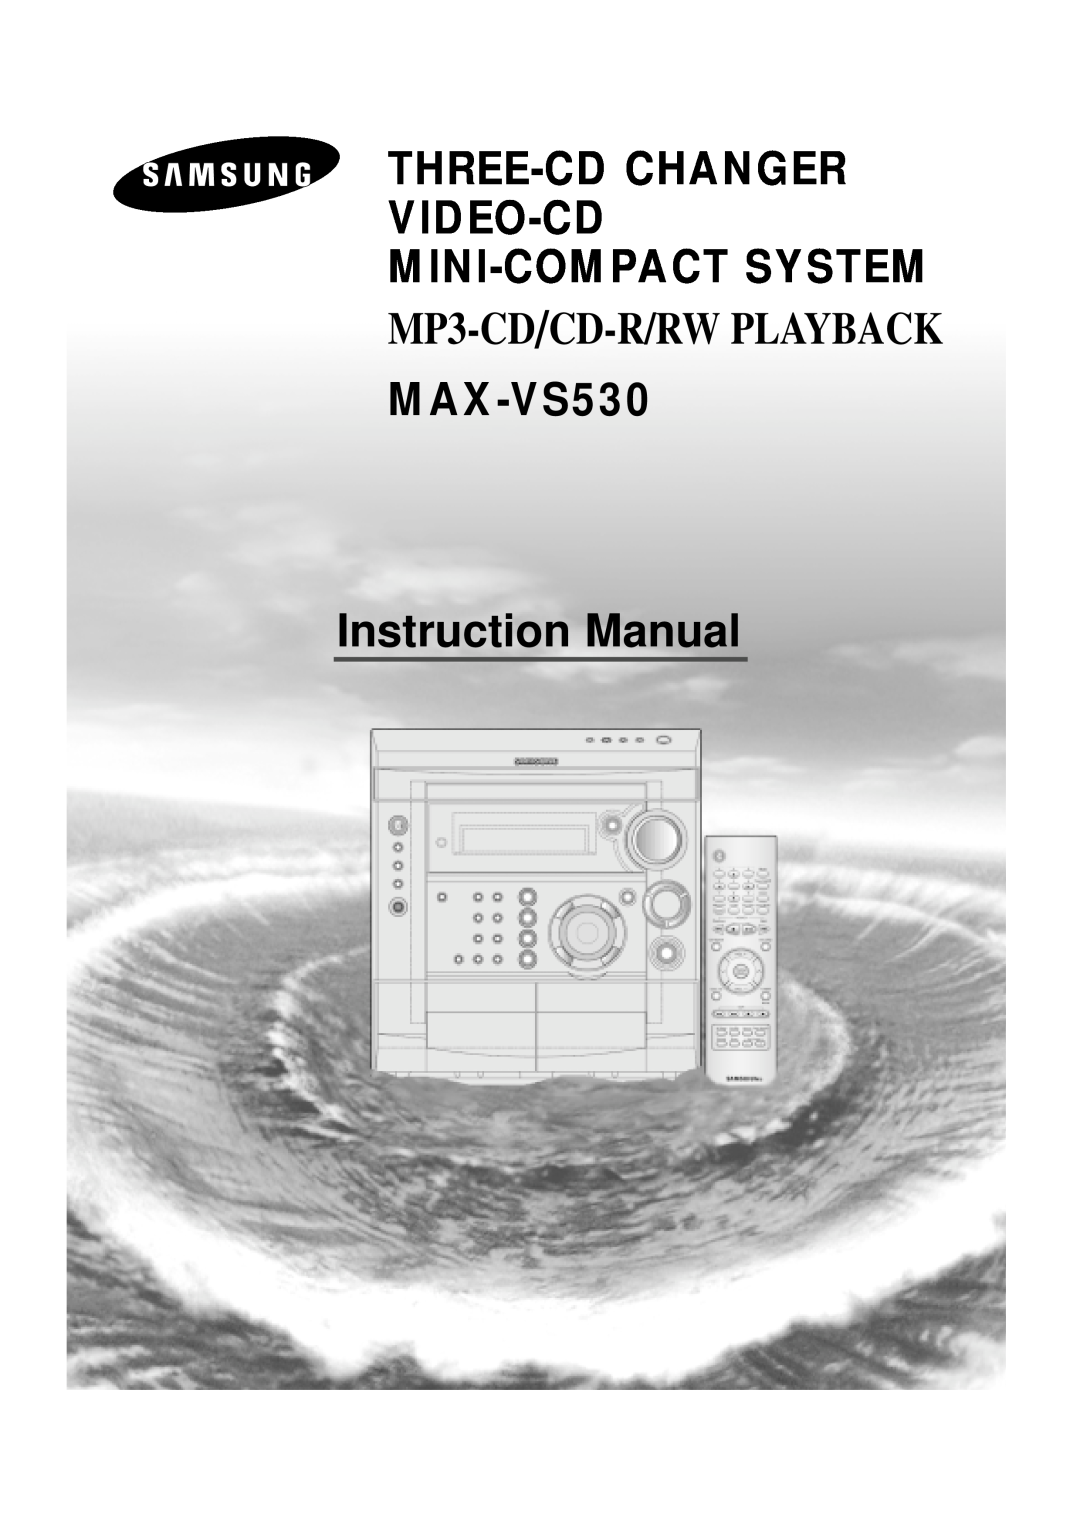 Samsung MAX-VS530 instruction manual Three-Cdchanger Video-Cd Mini-Compactsystem, MP3-CD/CD-R/RWPLAYBACK 